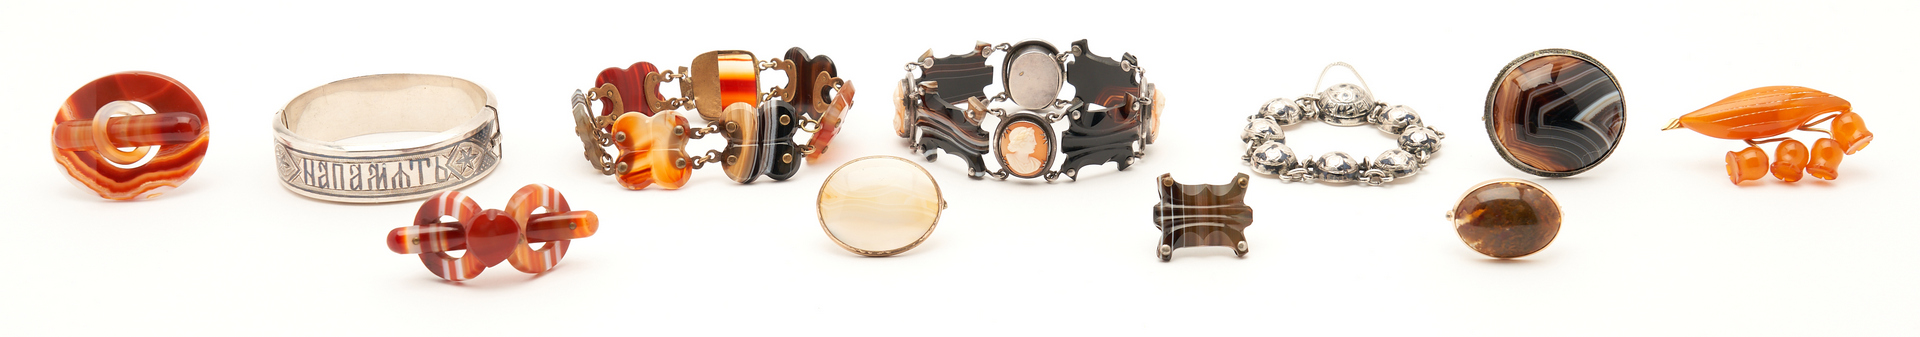 Lot 1119: 9 Agate Jewelry Items & 2 Russian Silver Bracelets, 11 items